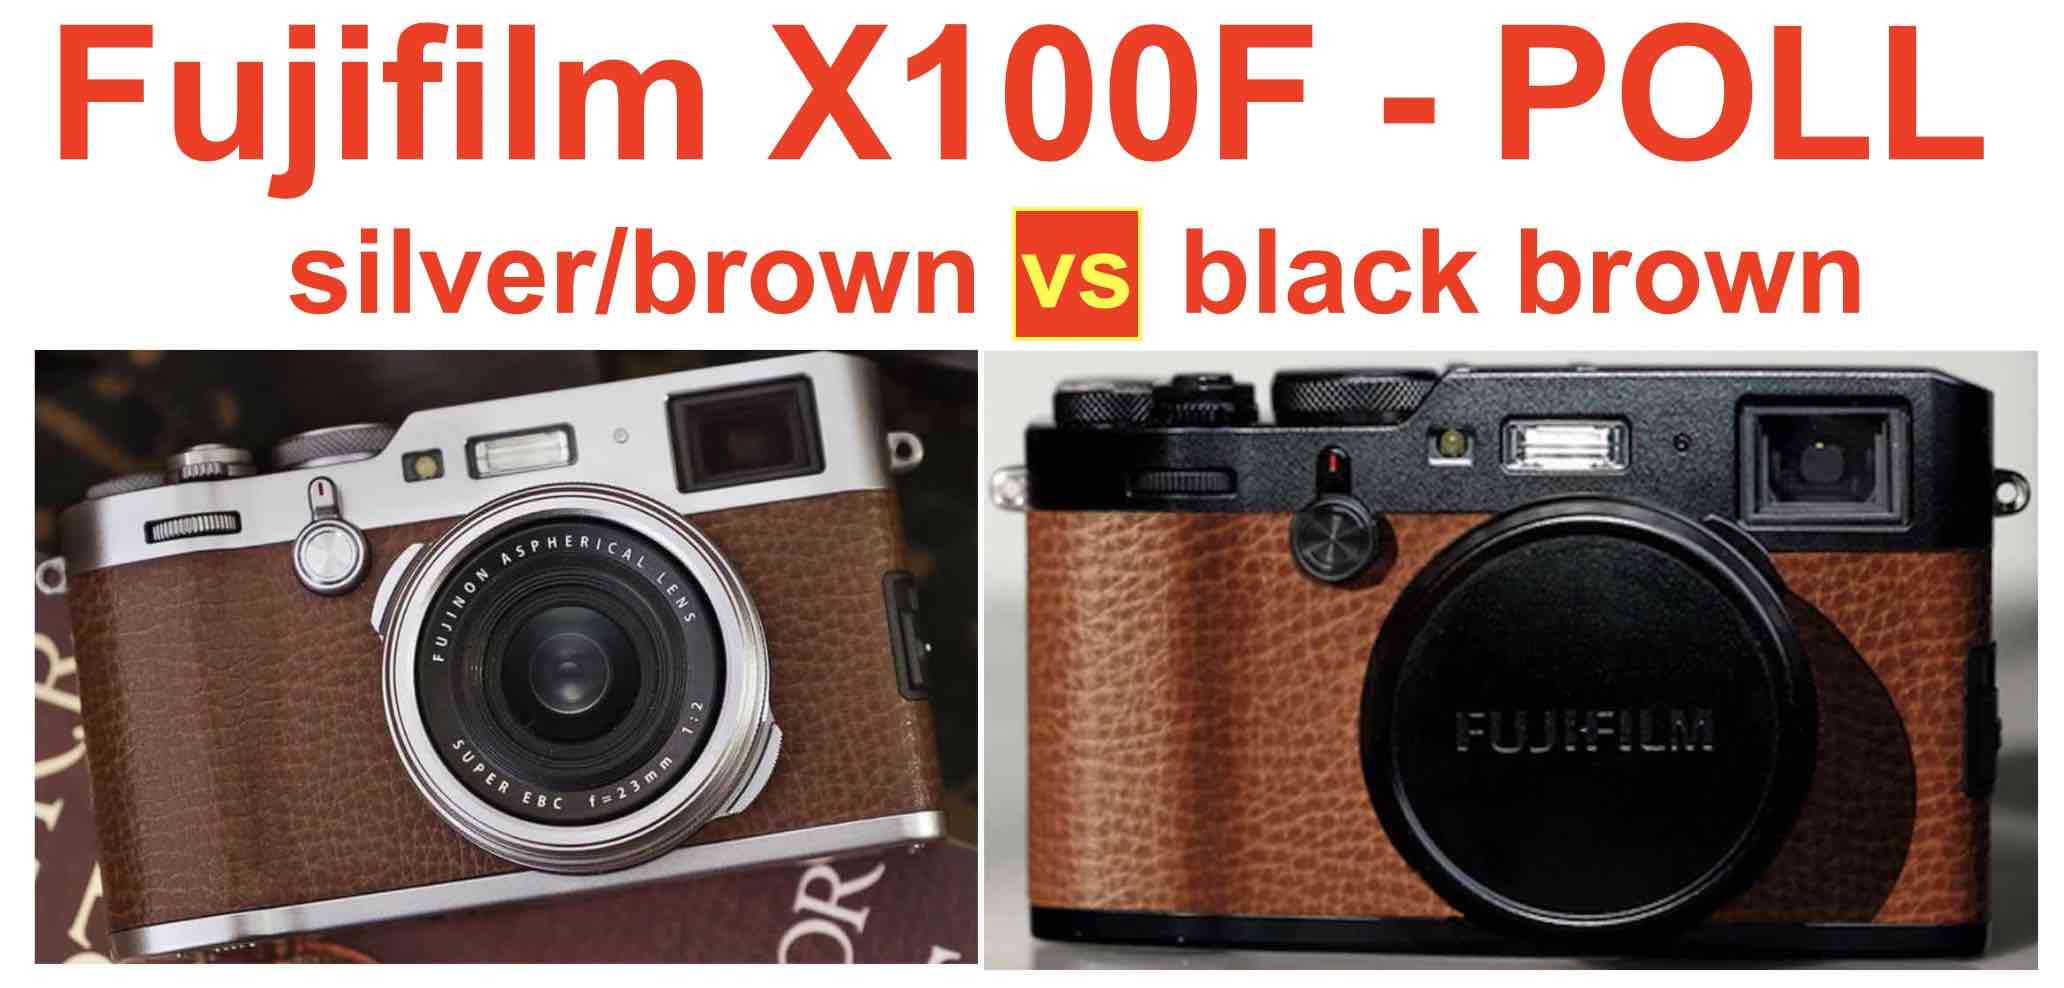 Computerspelletjes spelen Professor Grand Fujifilm X100F: Do You Prefer Black-Brown or Silver-Brown? - Fuji Rumors